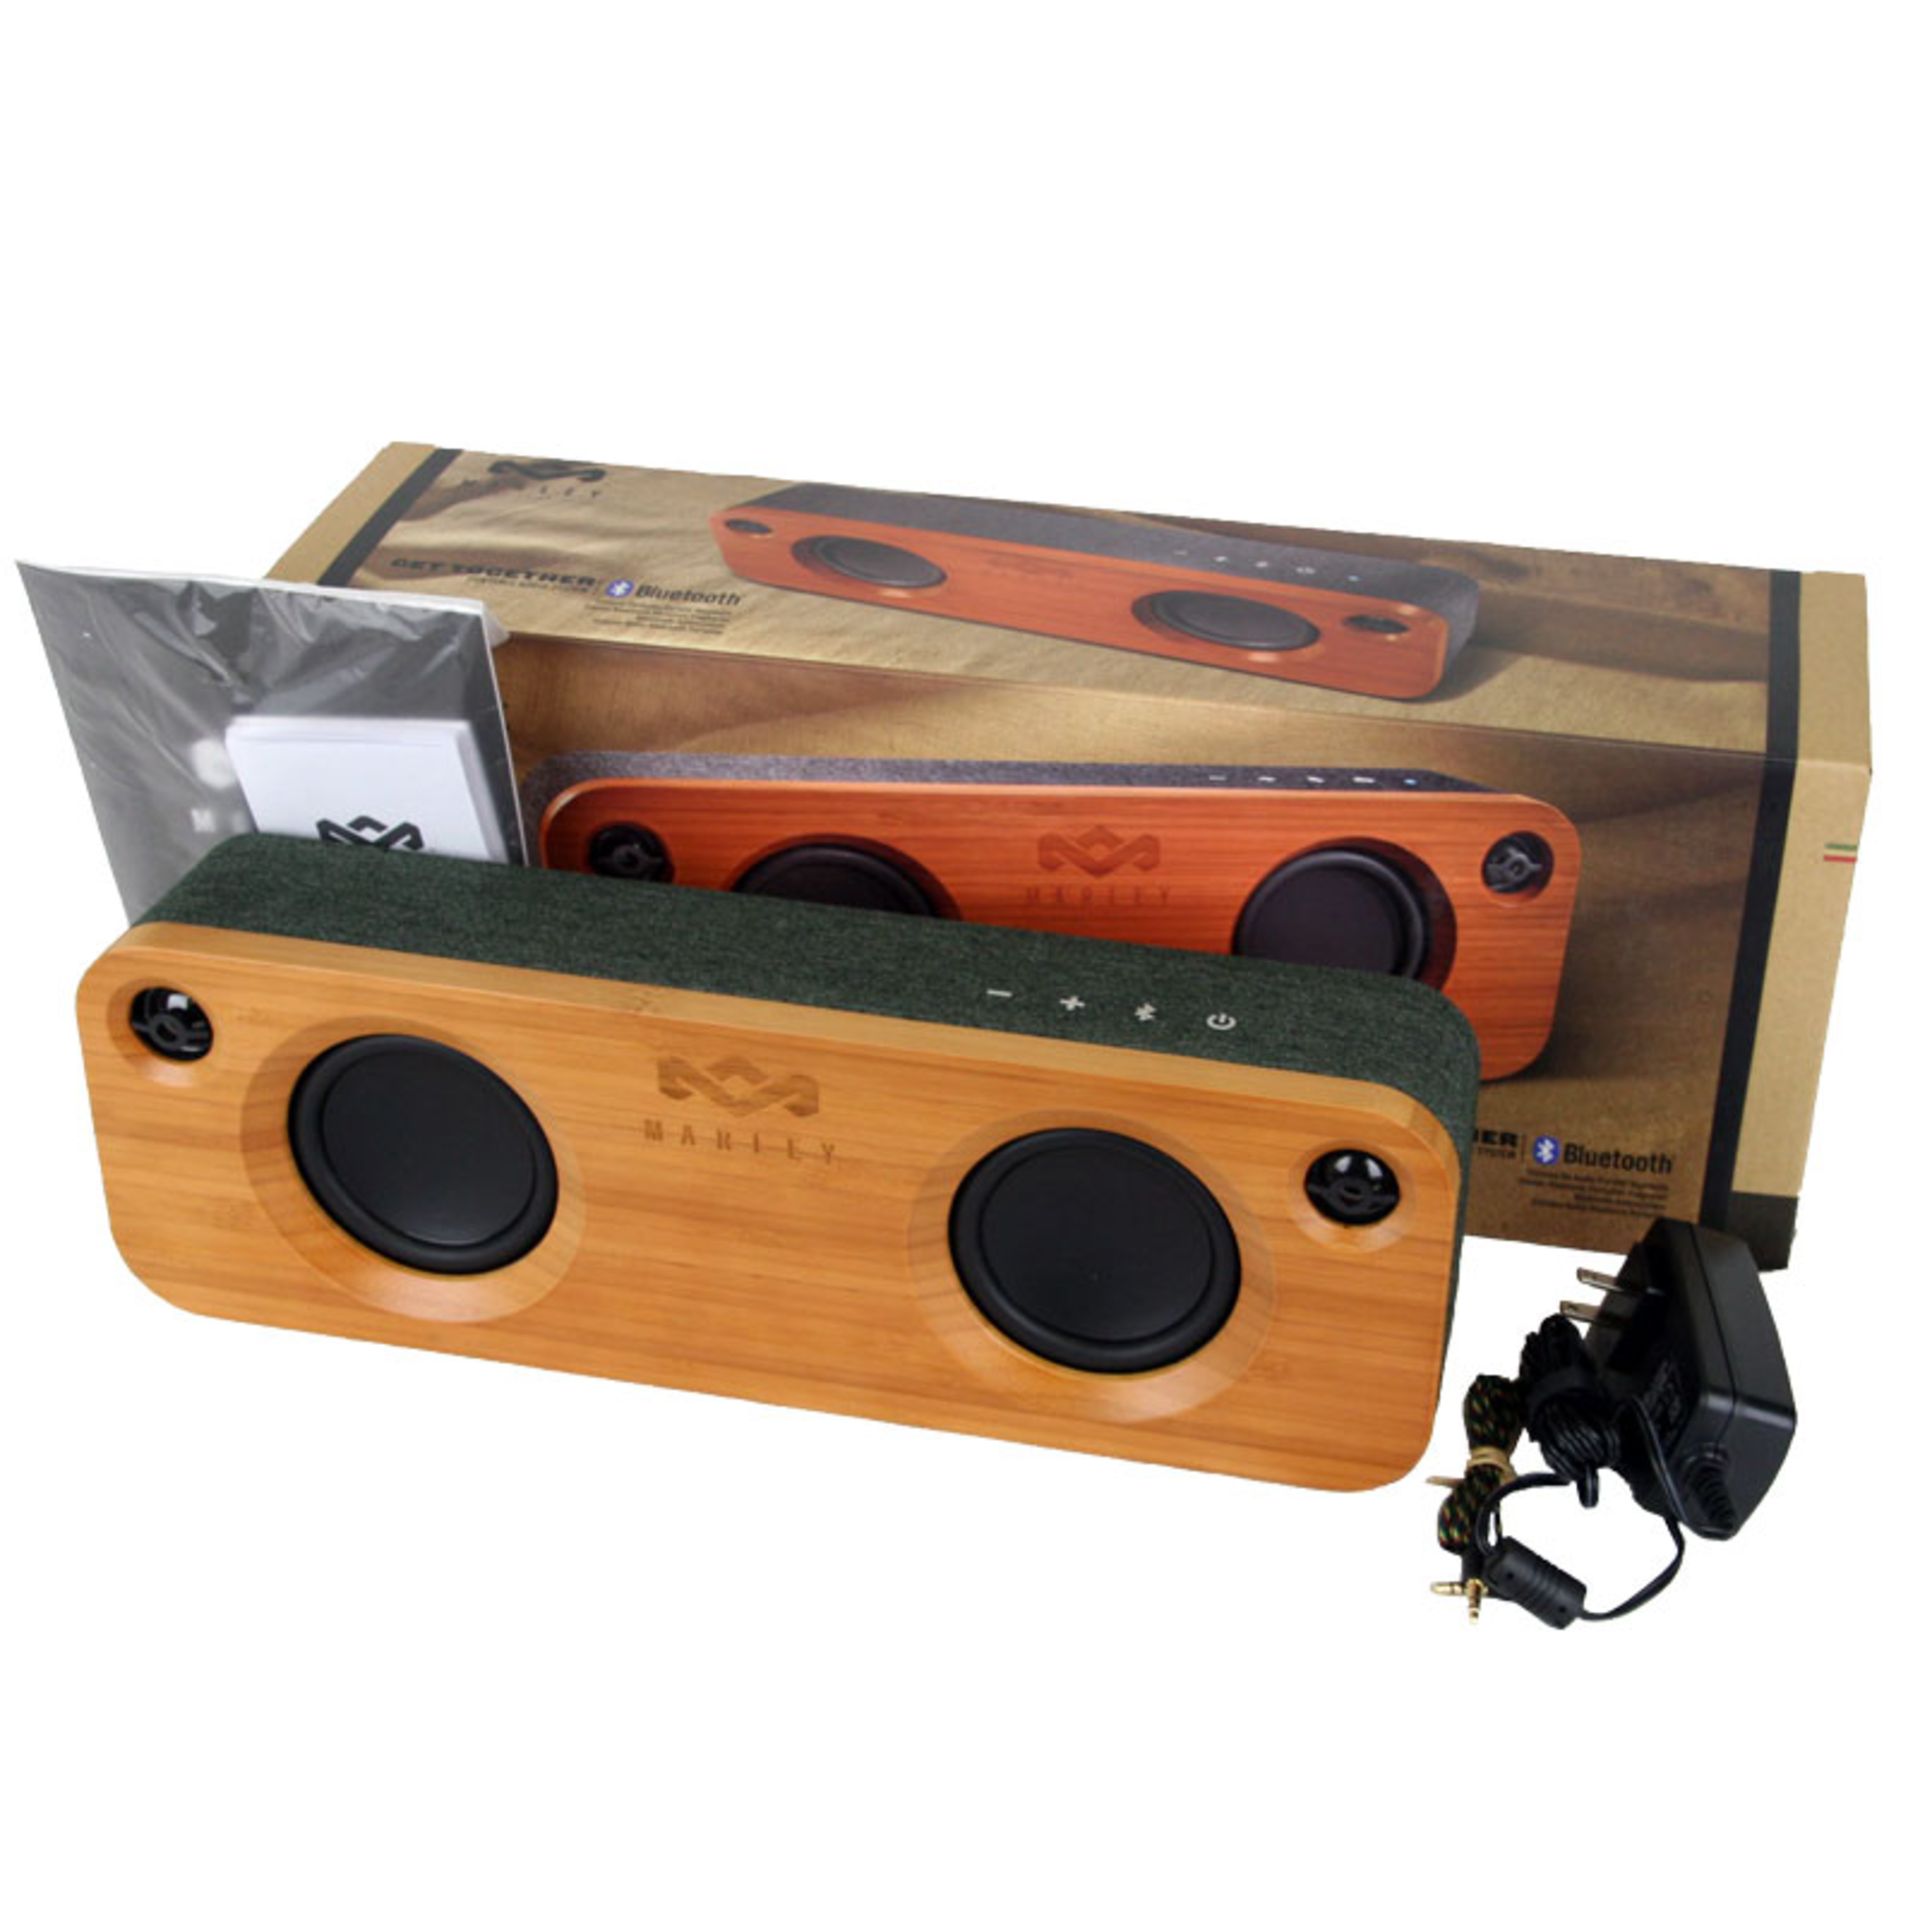 V Grade B Marley Get Together Portable Audio System - eBay Price £192.57 - 8 Hour Battery -